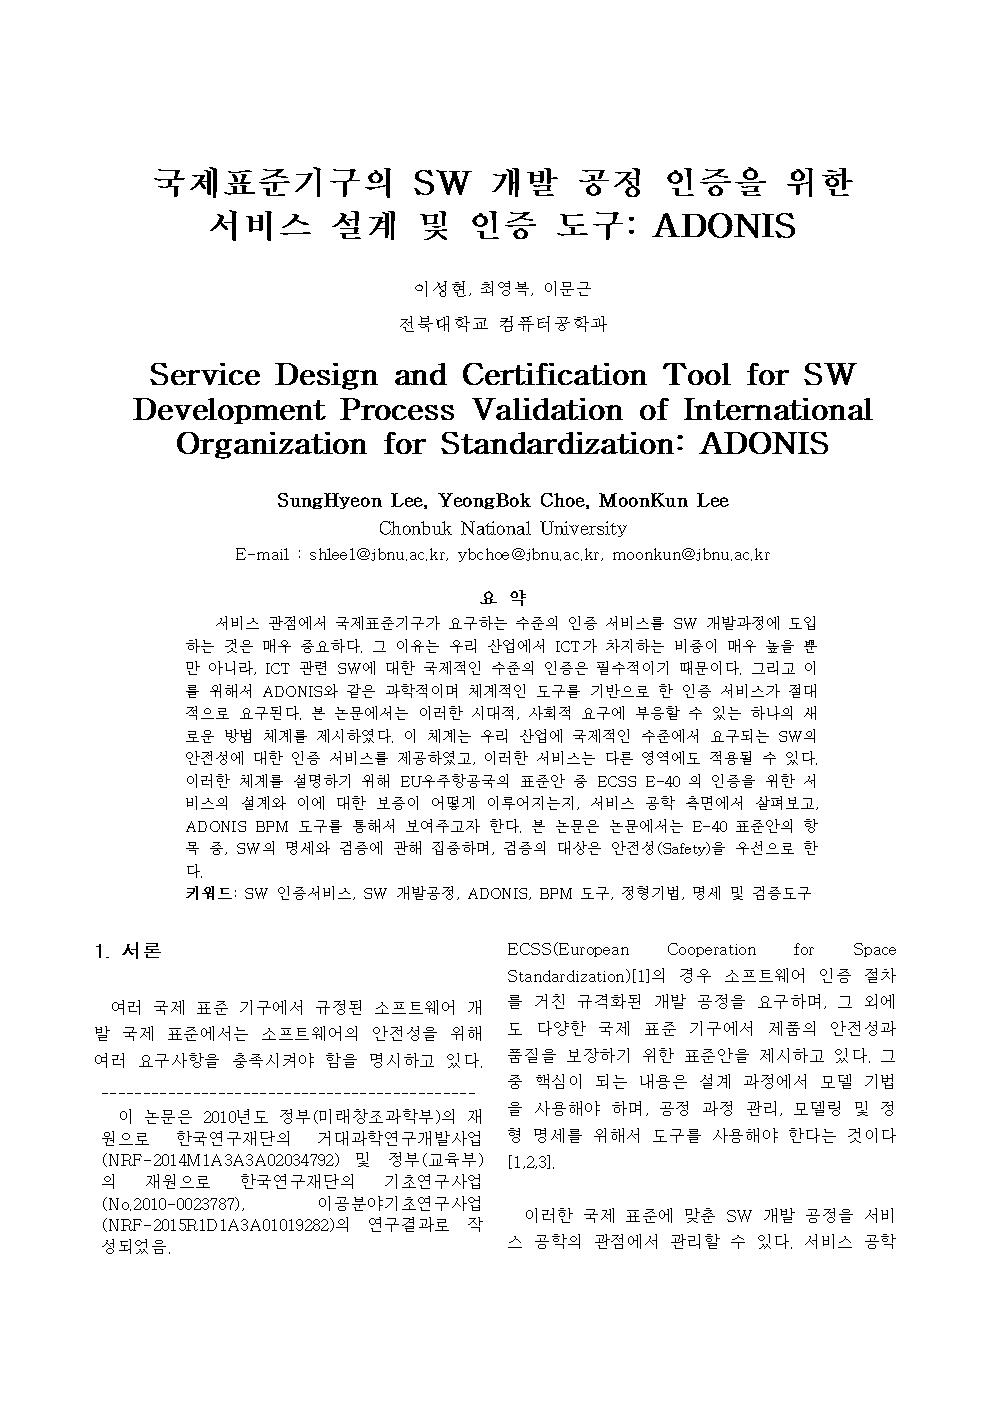 Service Science Paper ADONIS001.jpg